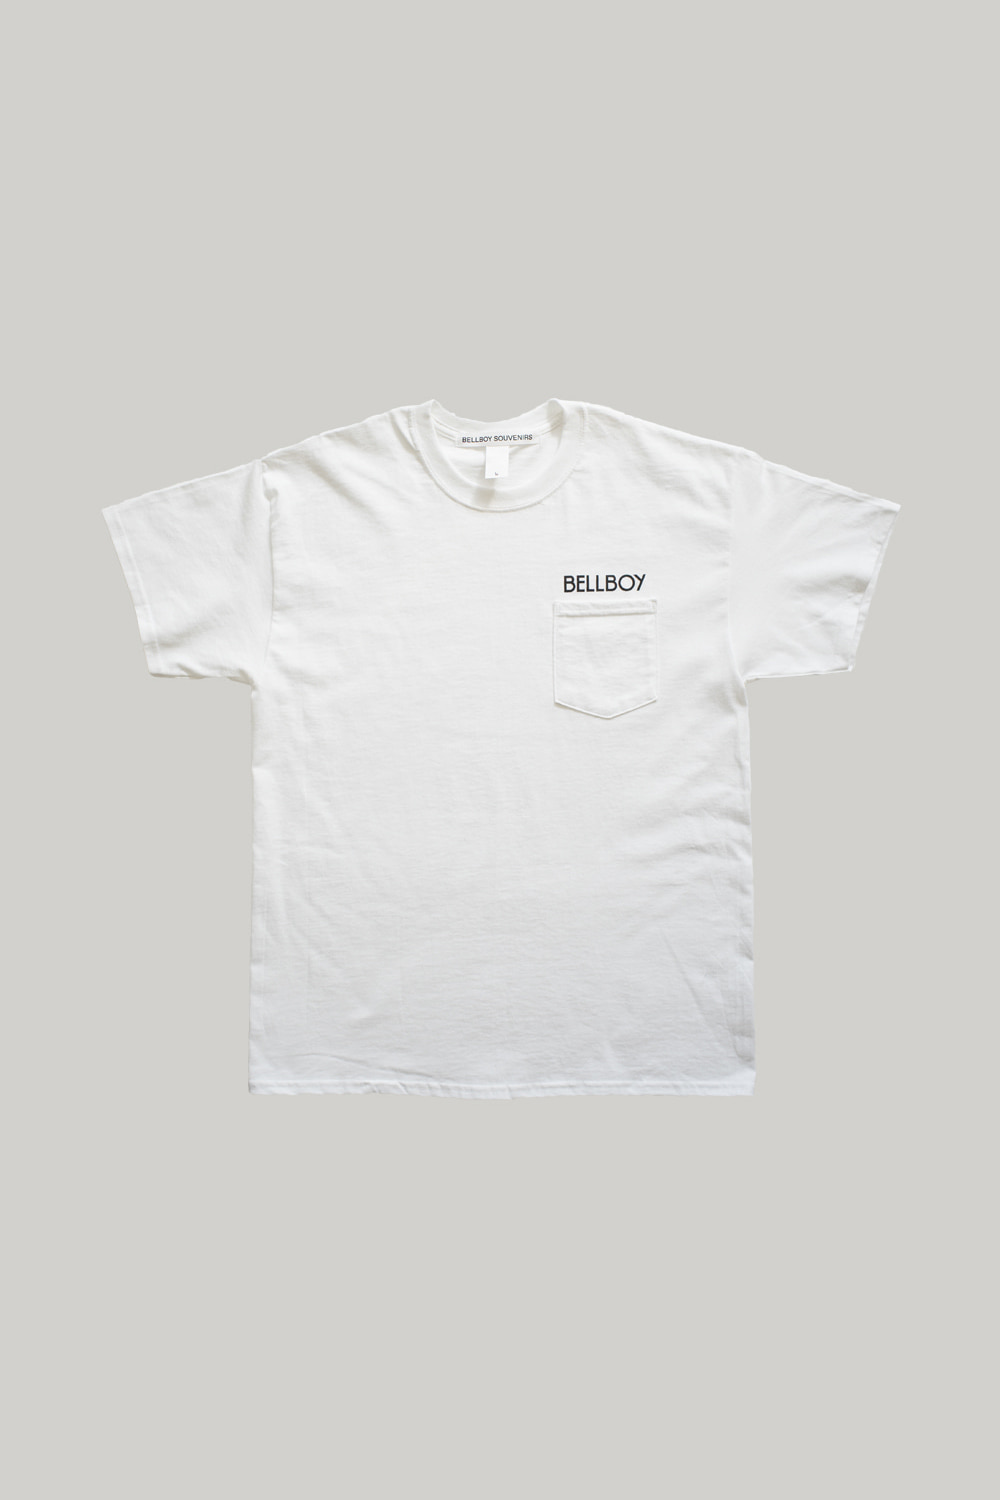 BELLBOY Pocket T-Shirts - White 티셔츠, 워시드 헤비웨이트 티셔츠, 옥스포드셔츠, 버튼다운셔츠, 메신저백, 캔버스백